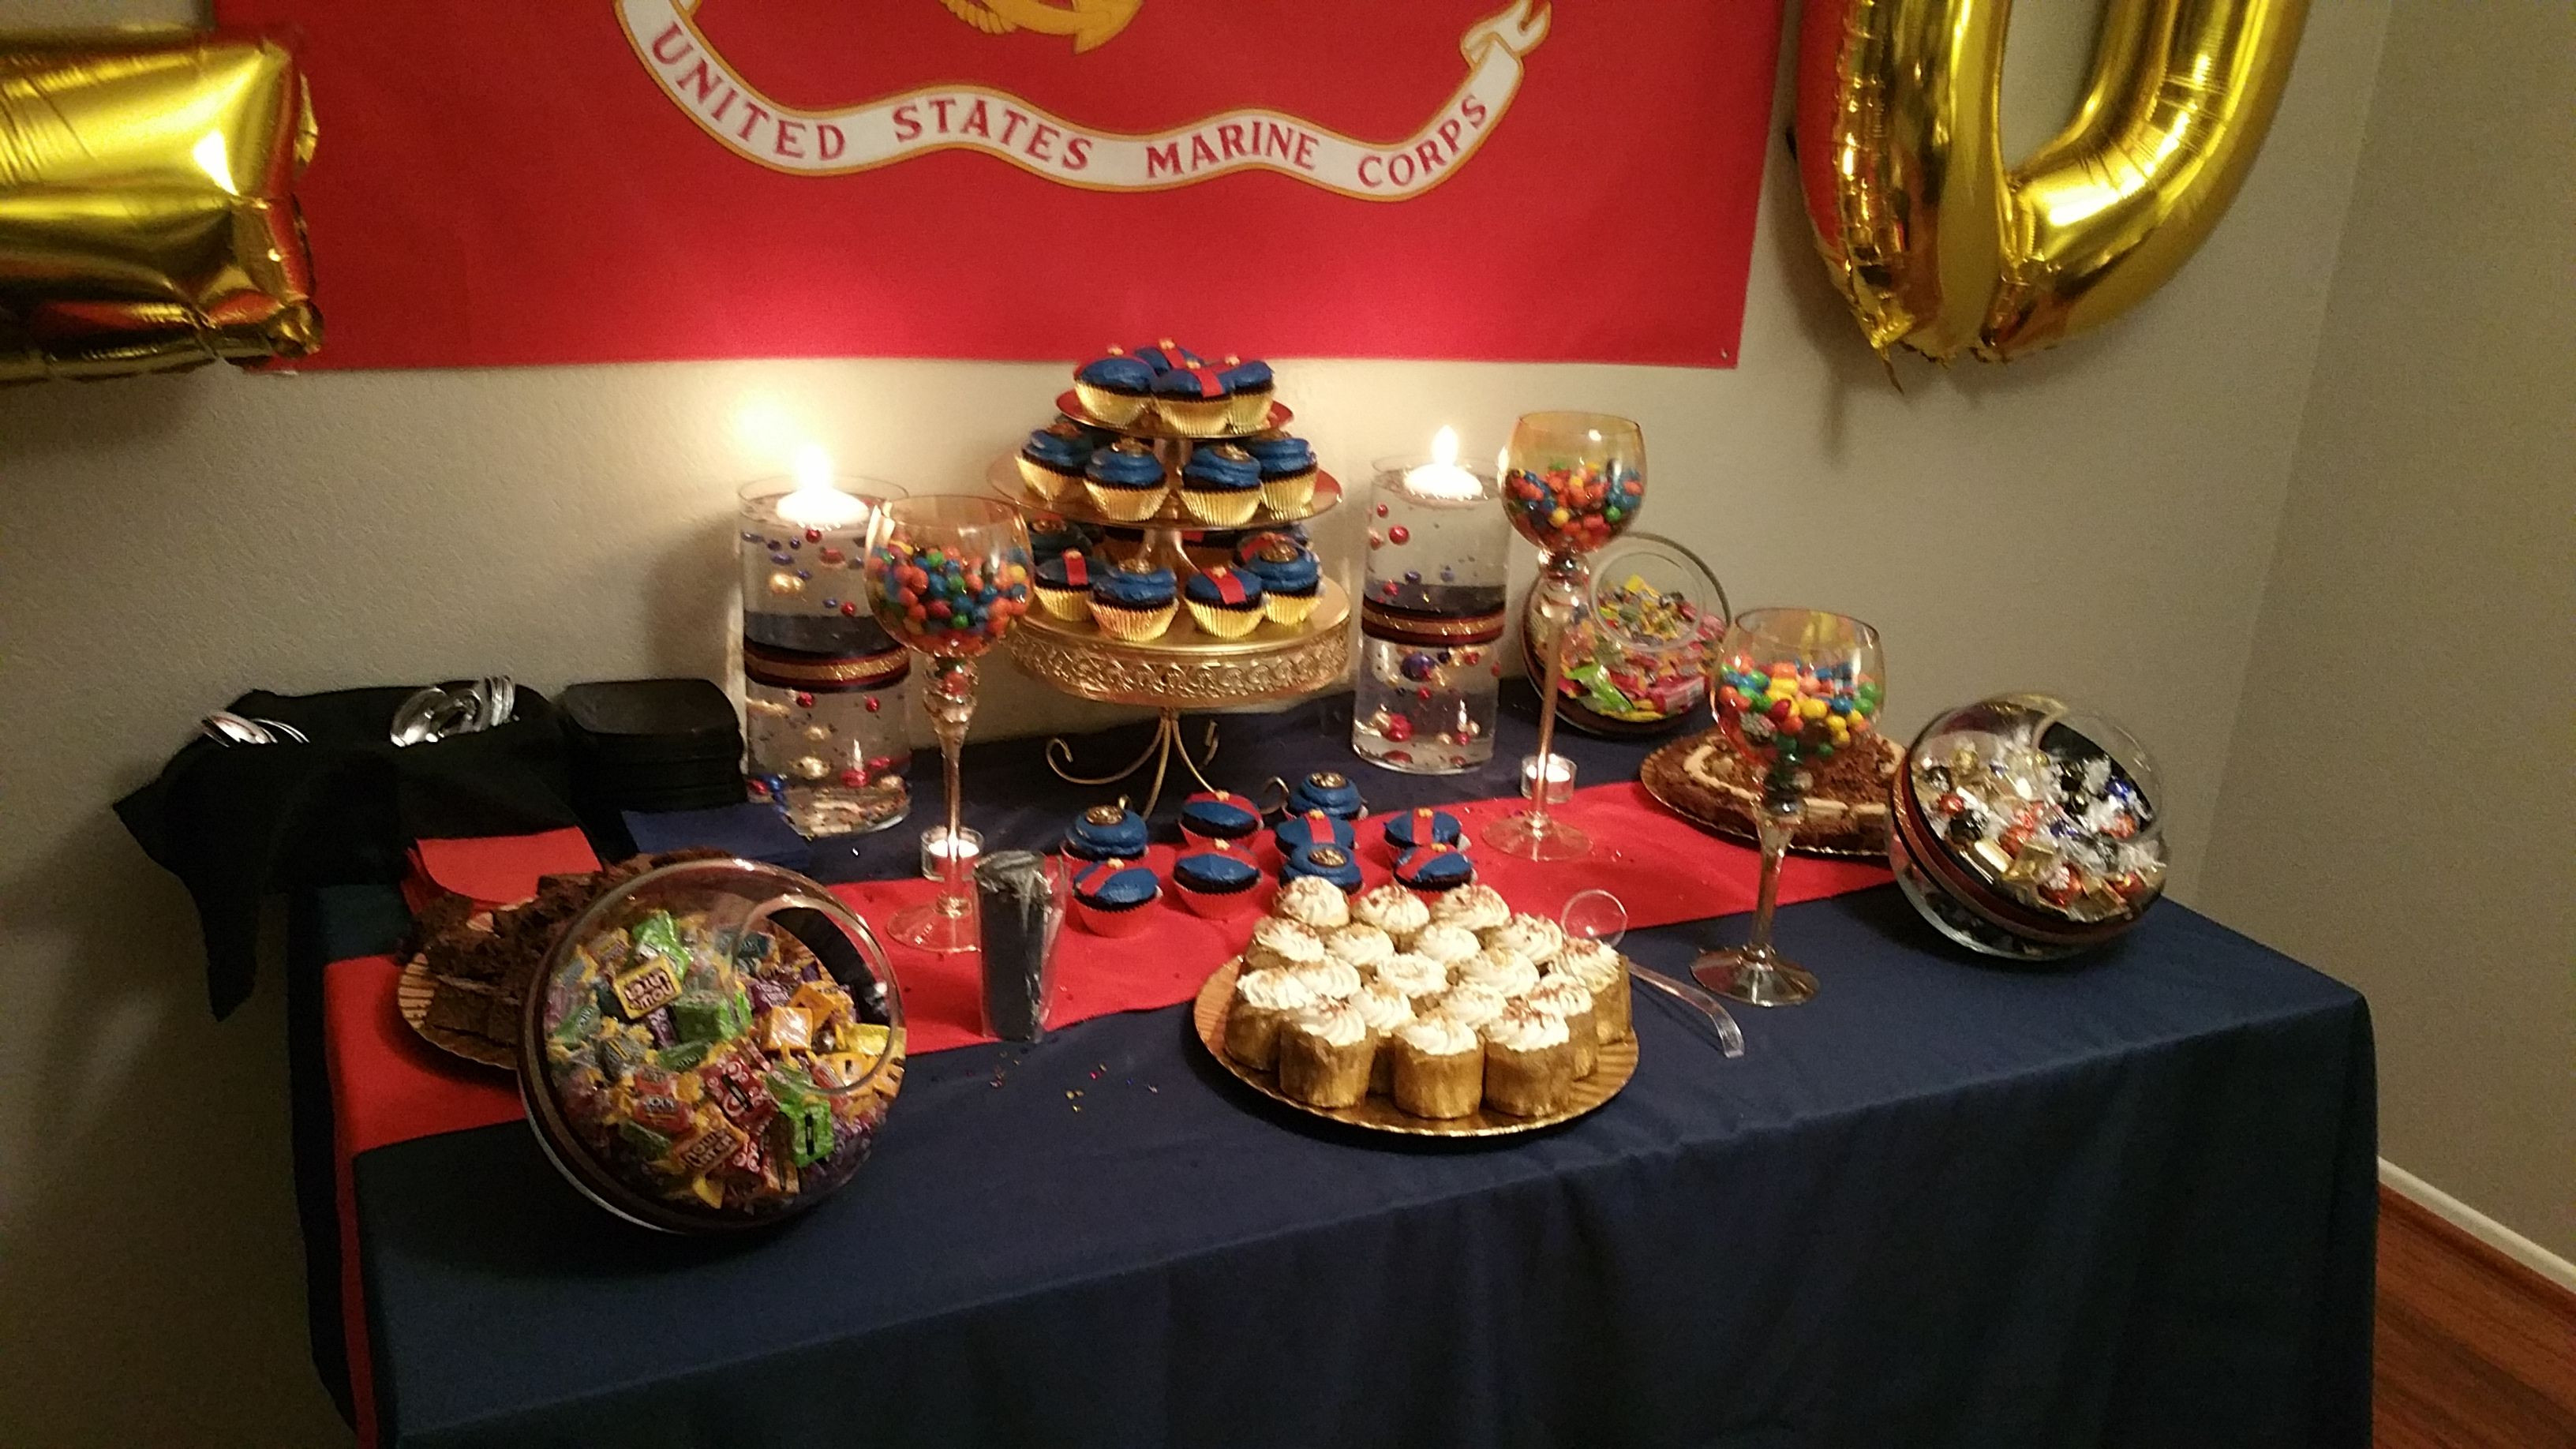 Marine Corps Retirement Party Ideas
 Dessert Table created for a Marine Corps Retirement event